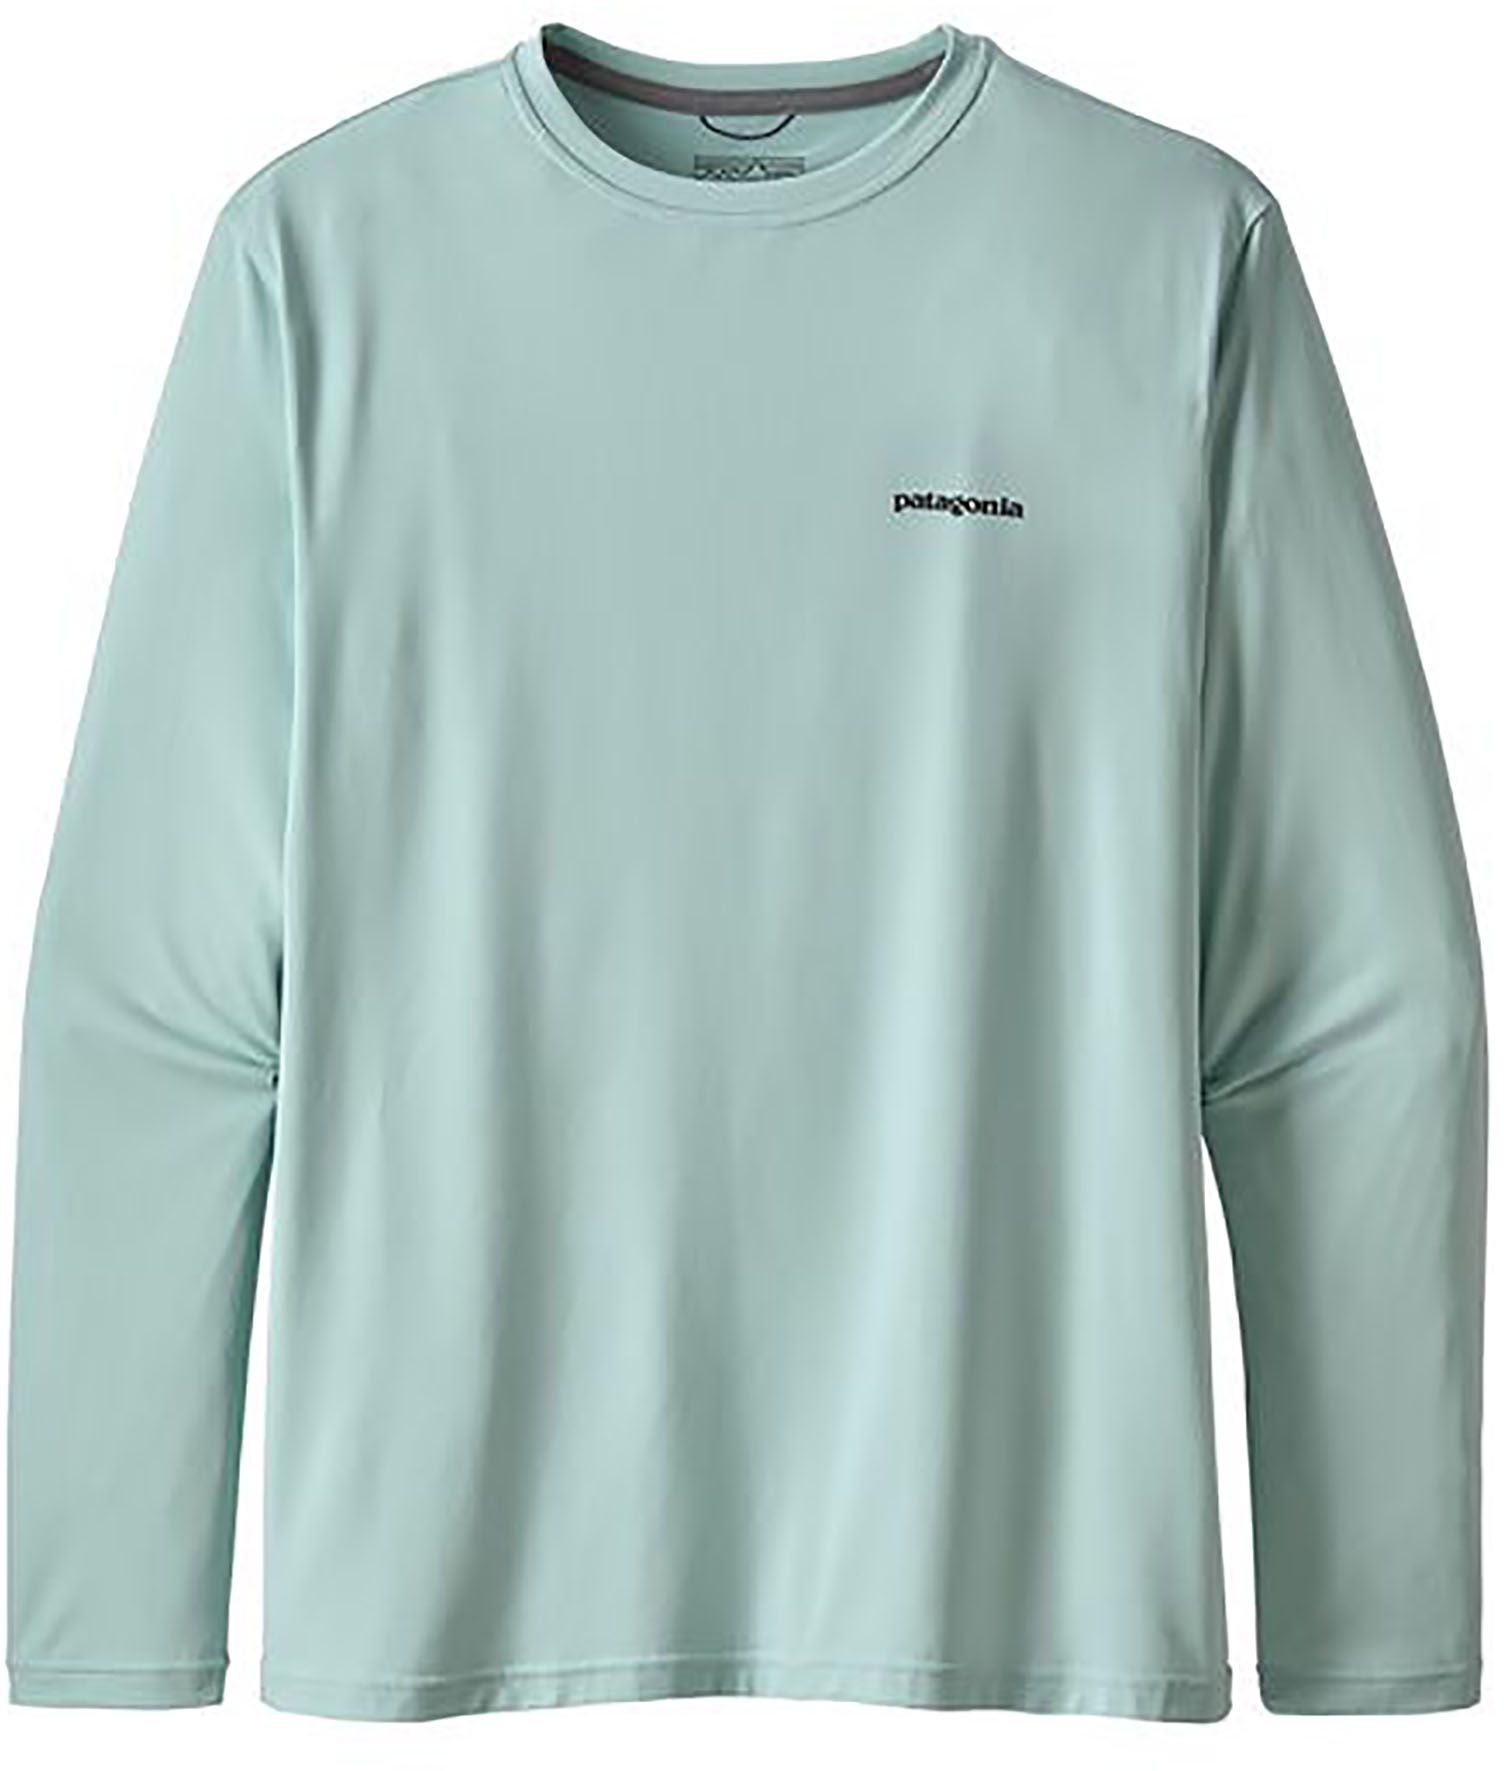 patagonia sweatshirt on sale